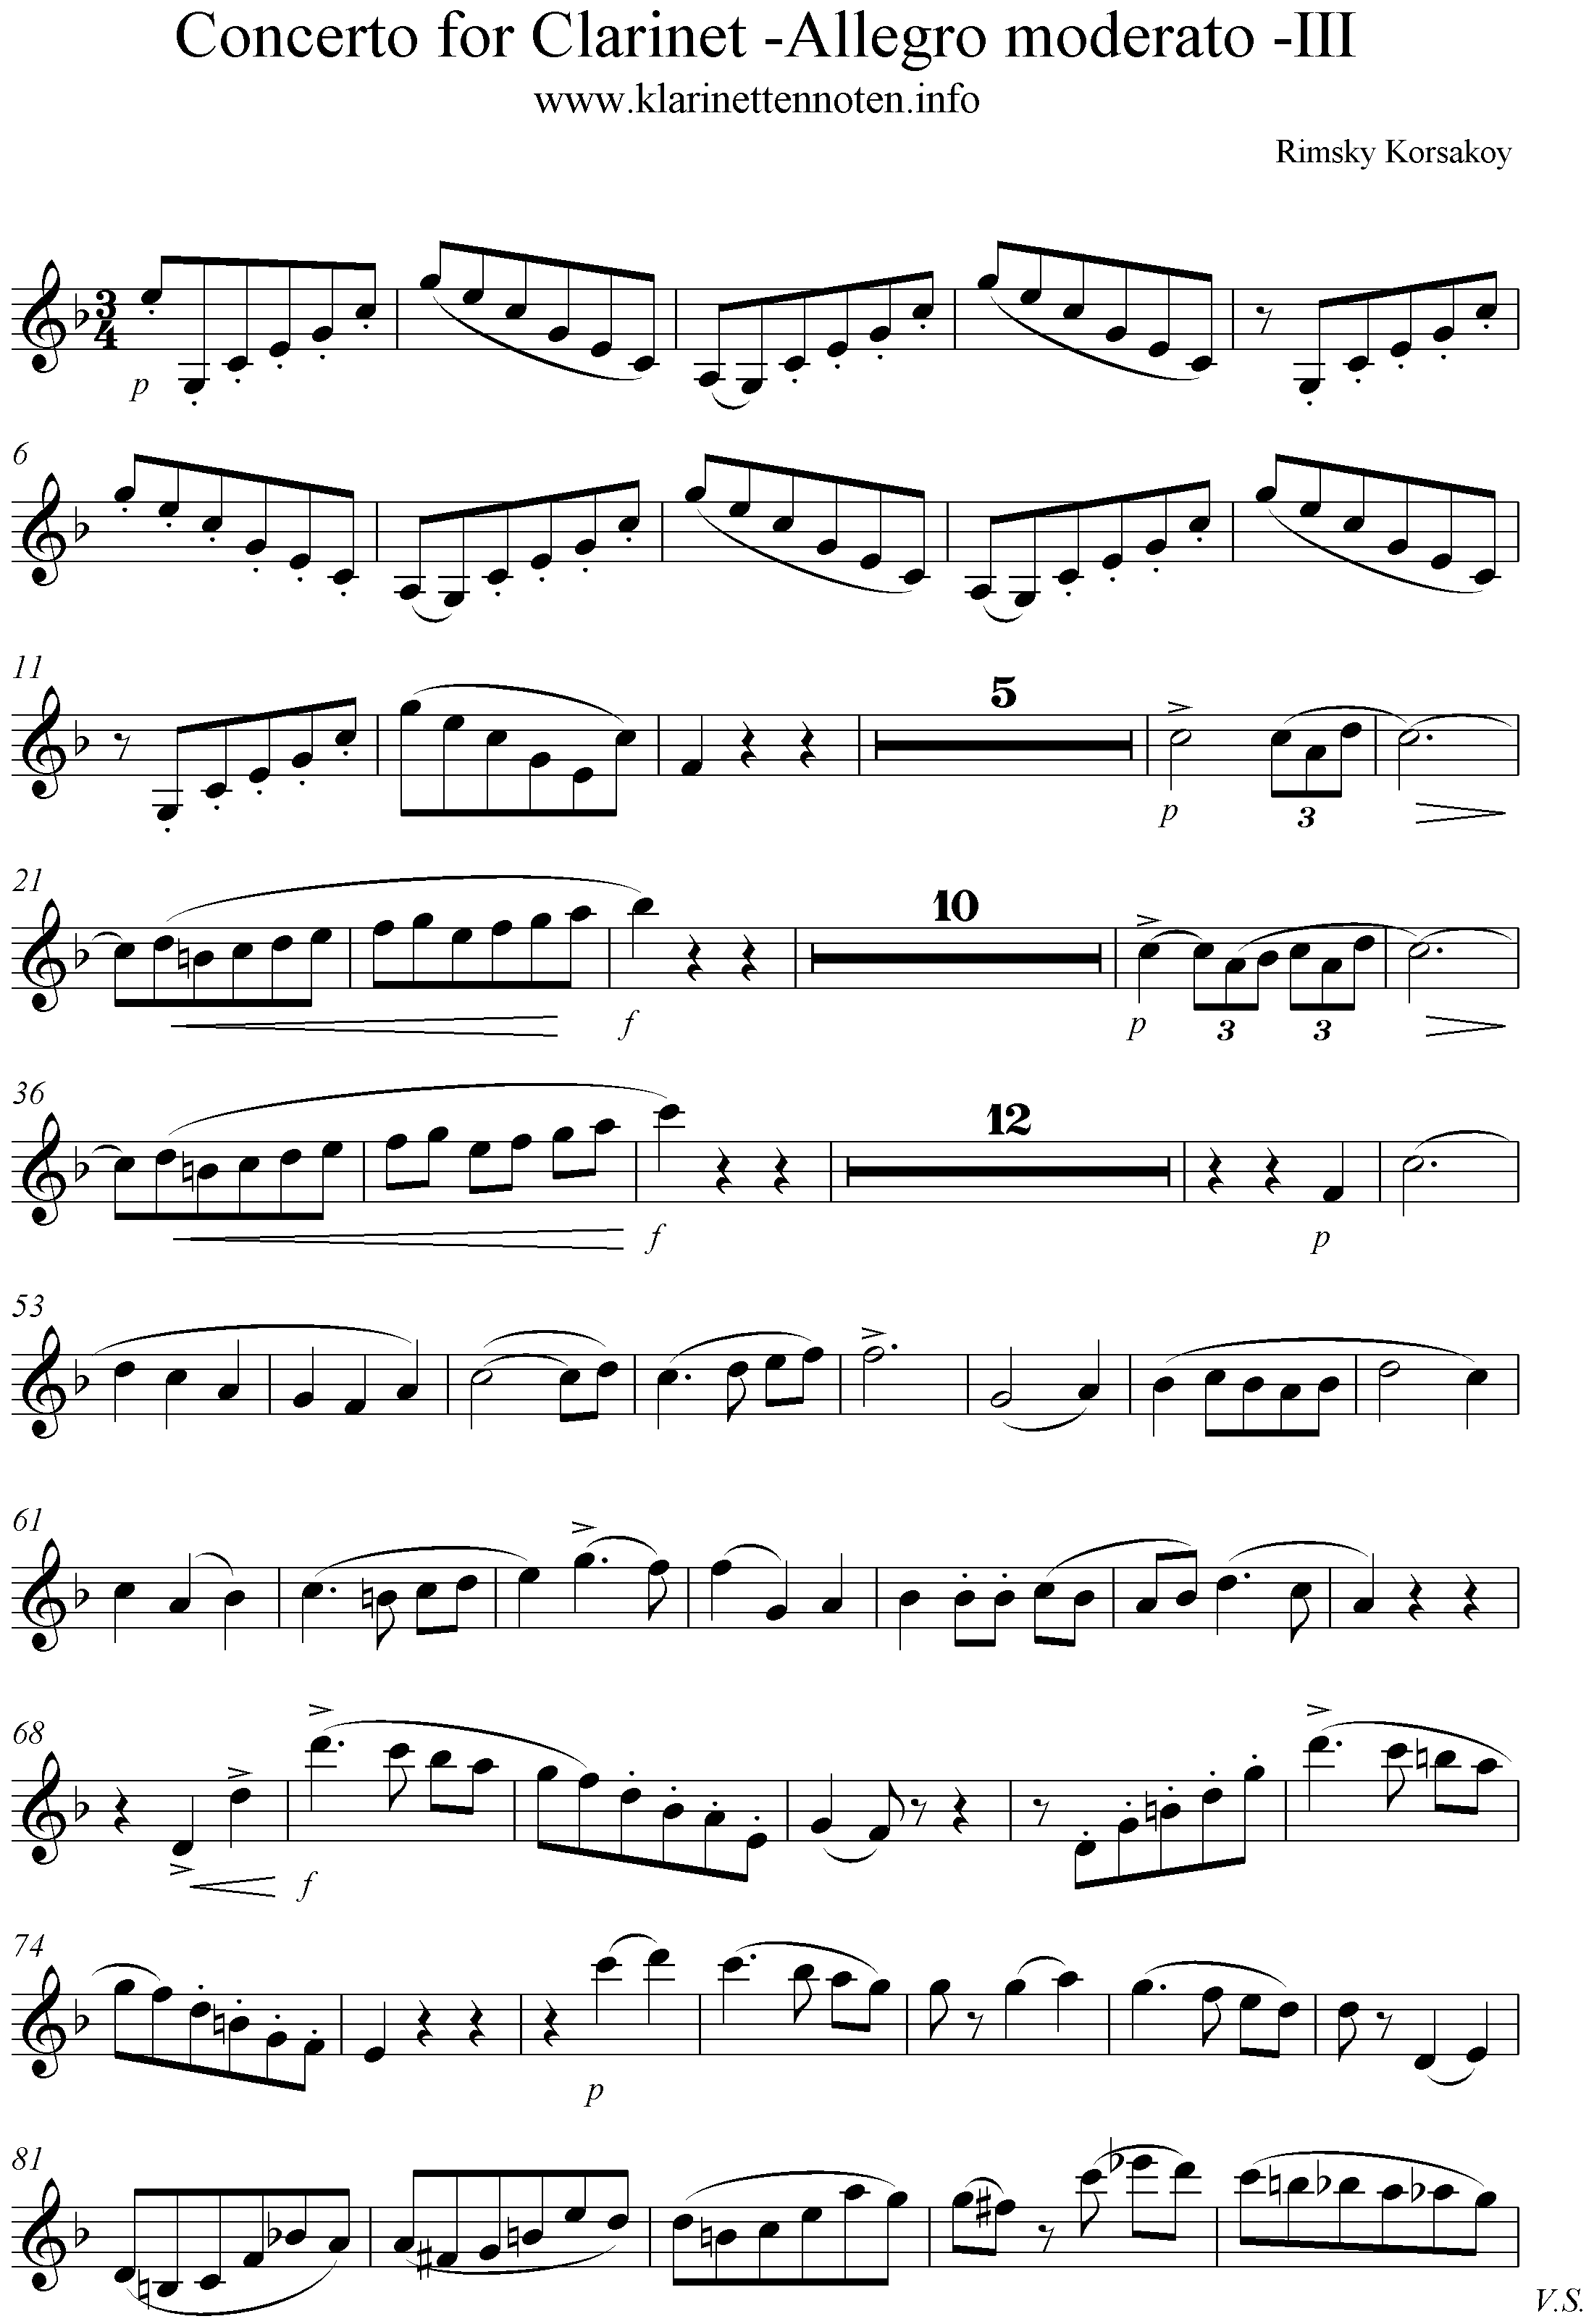 Korsakov, Concerto for Clarinet, III- Allegro moderato